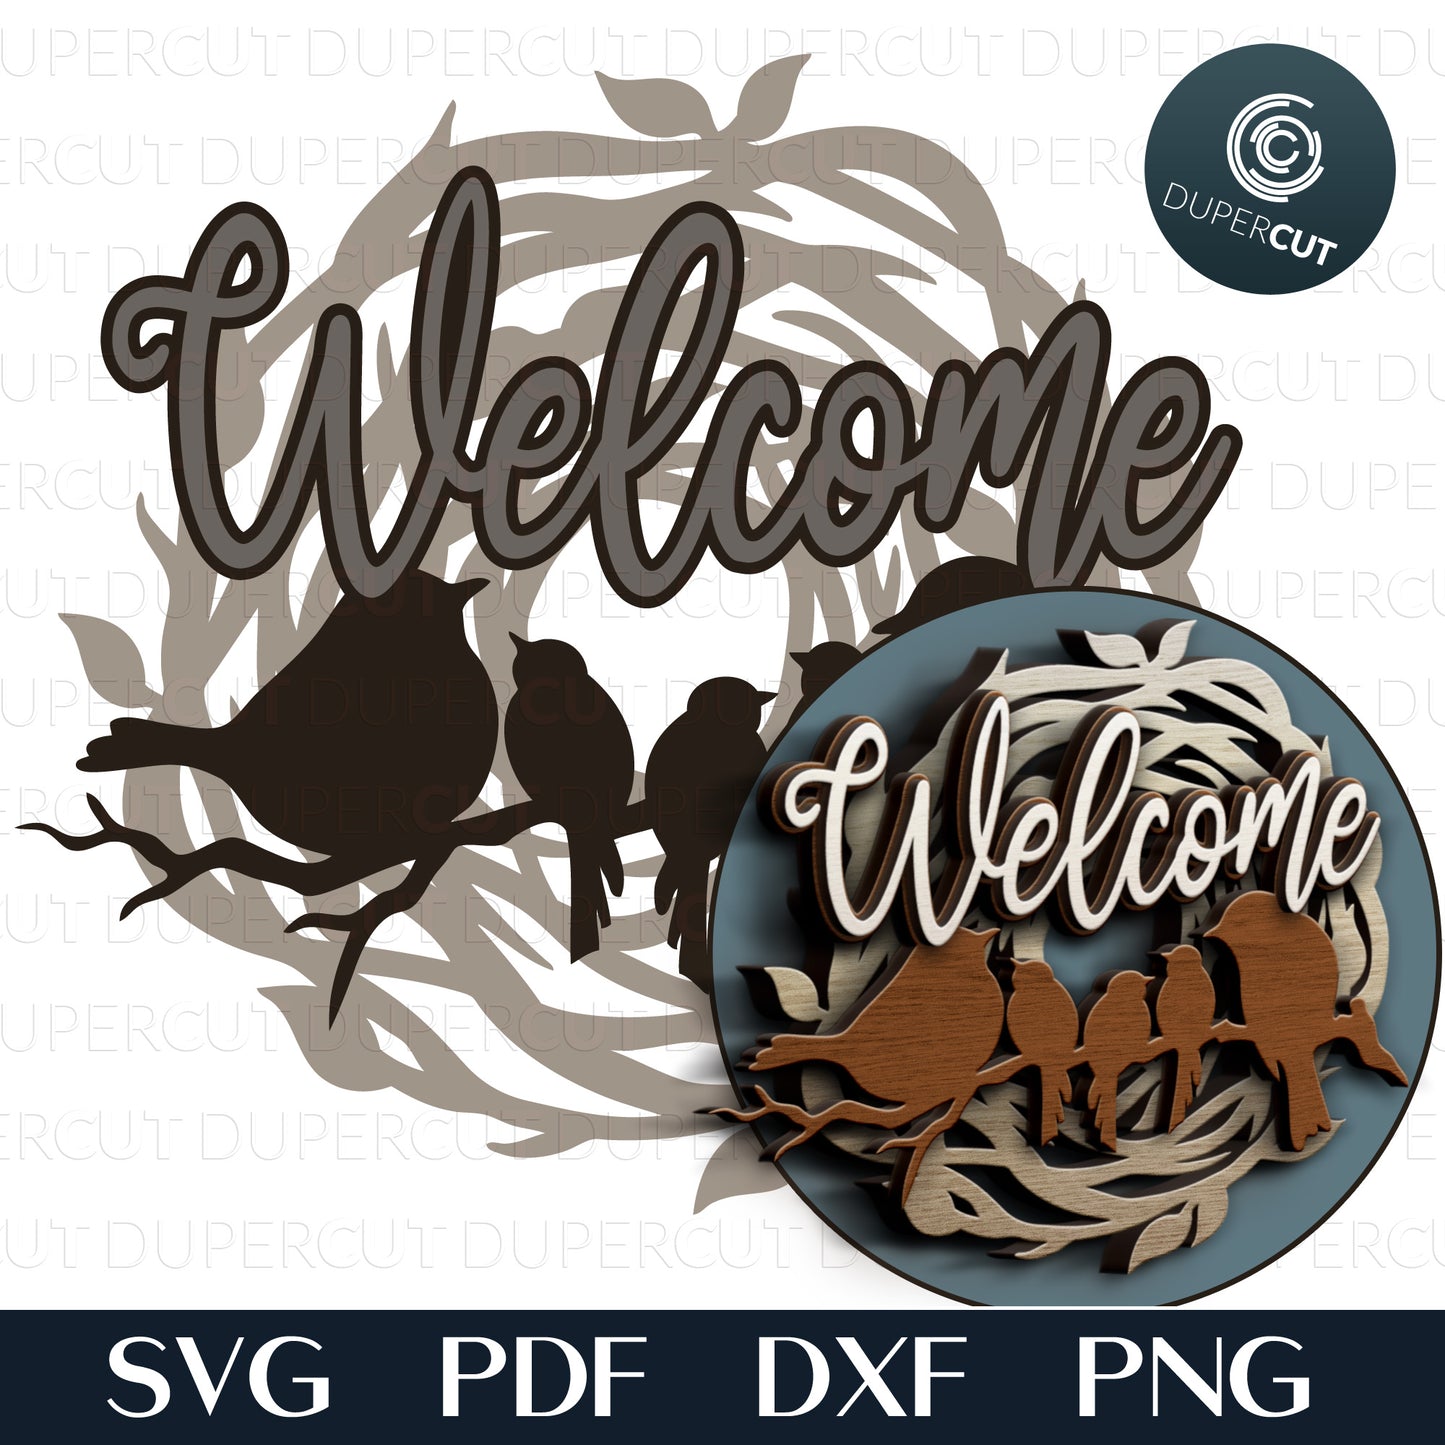 WELCOME NEST - SVG / PDF / DXF